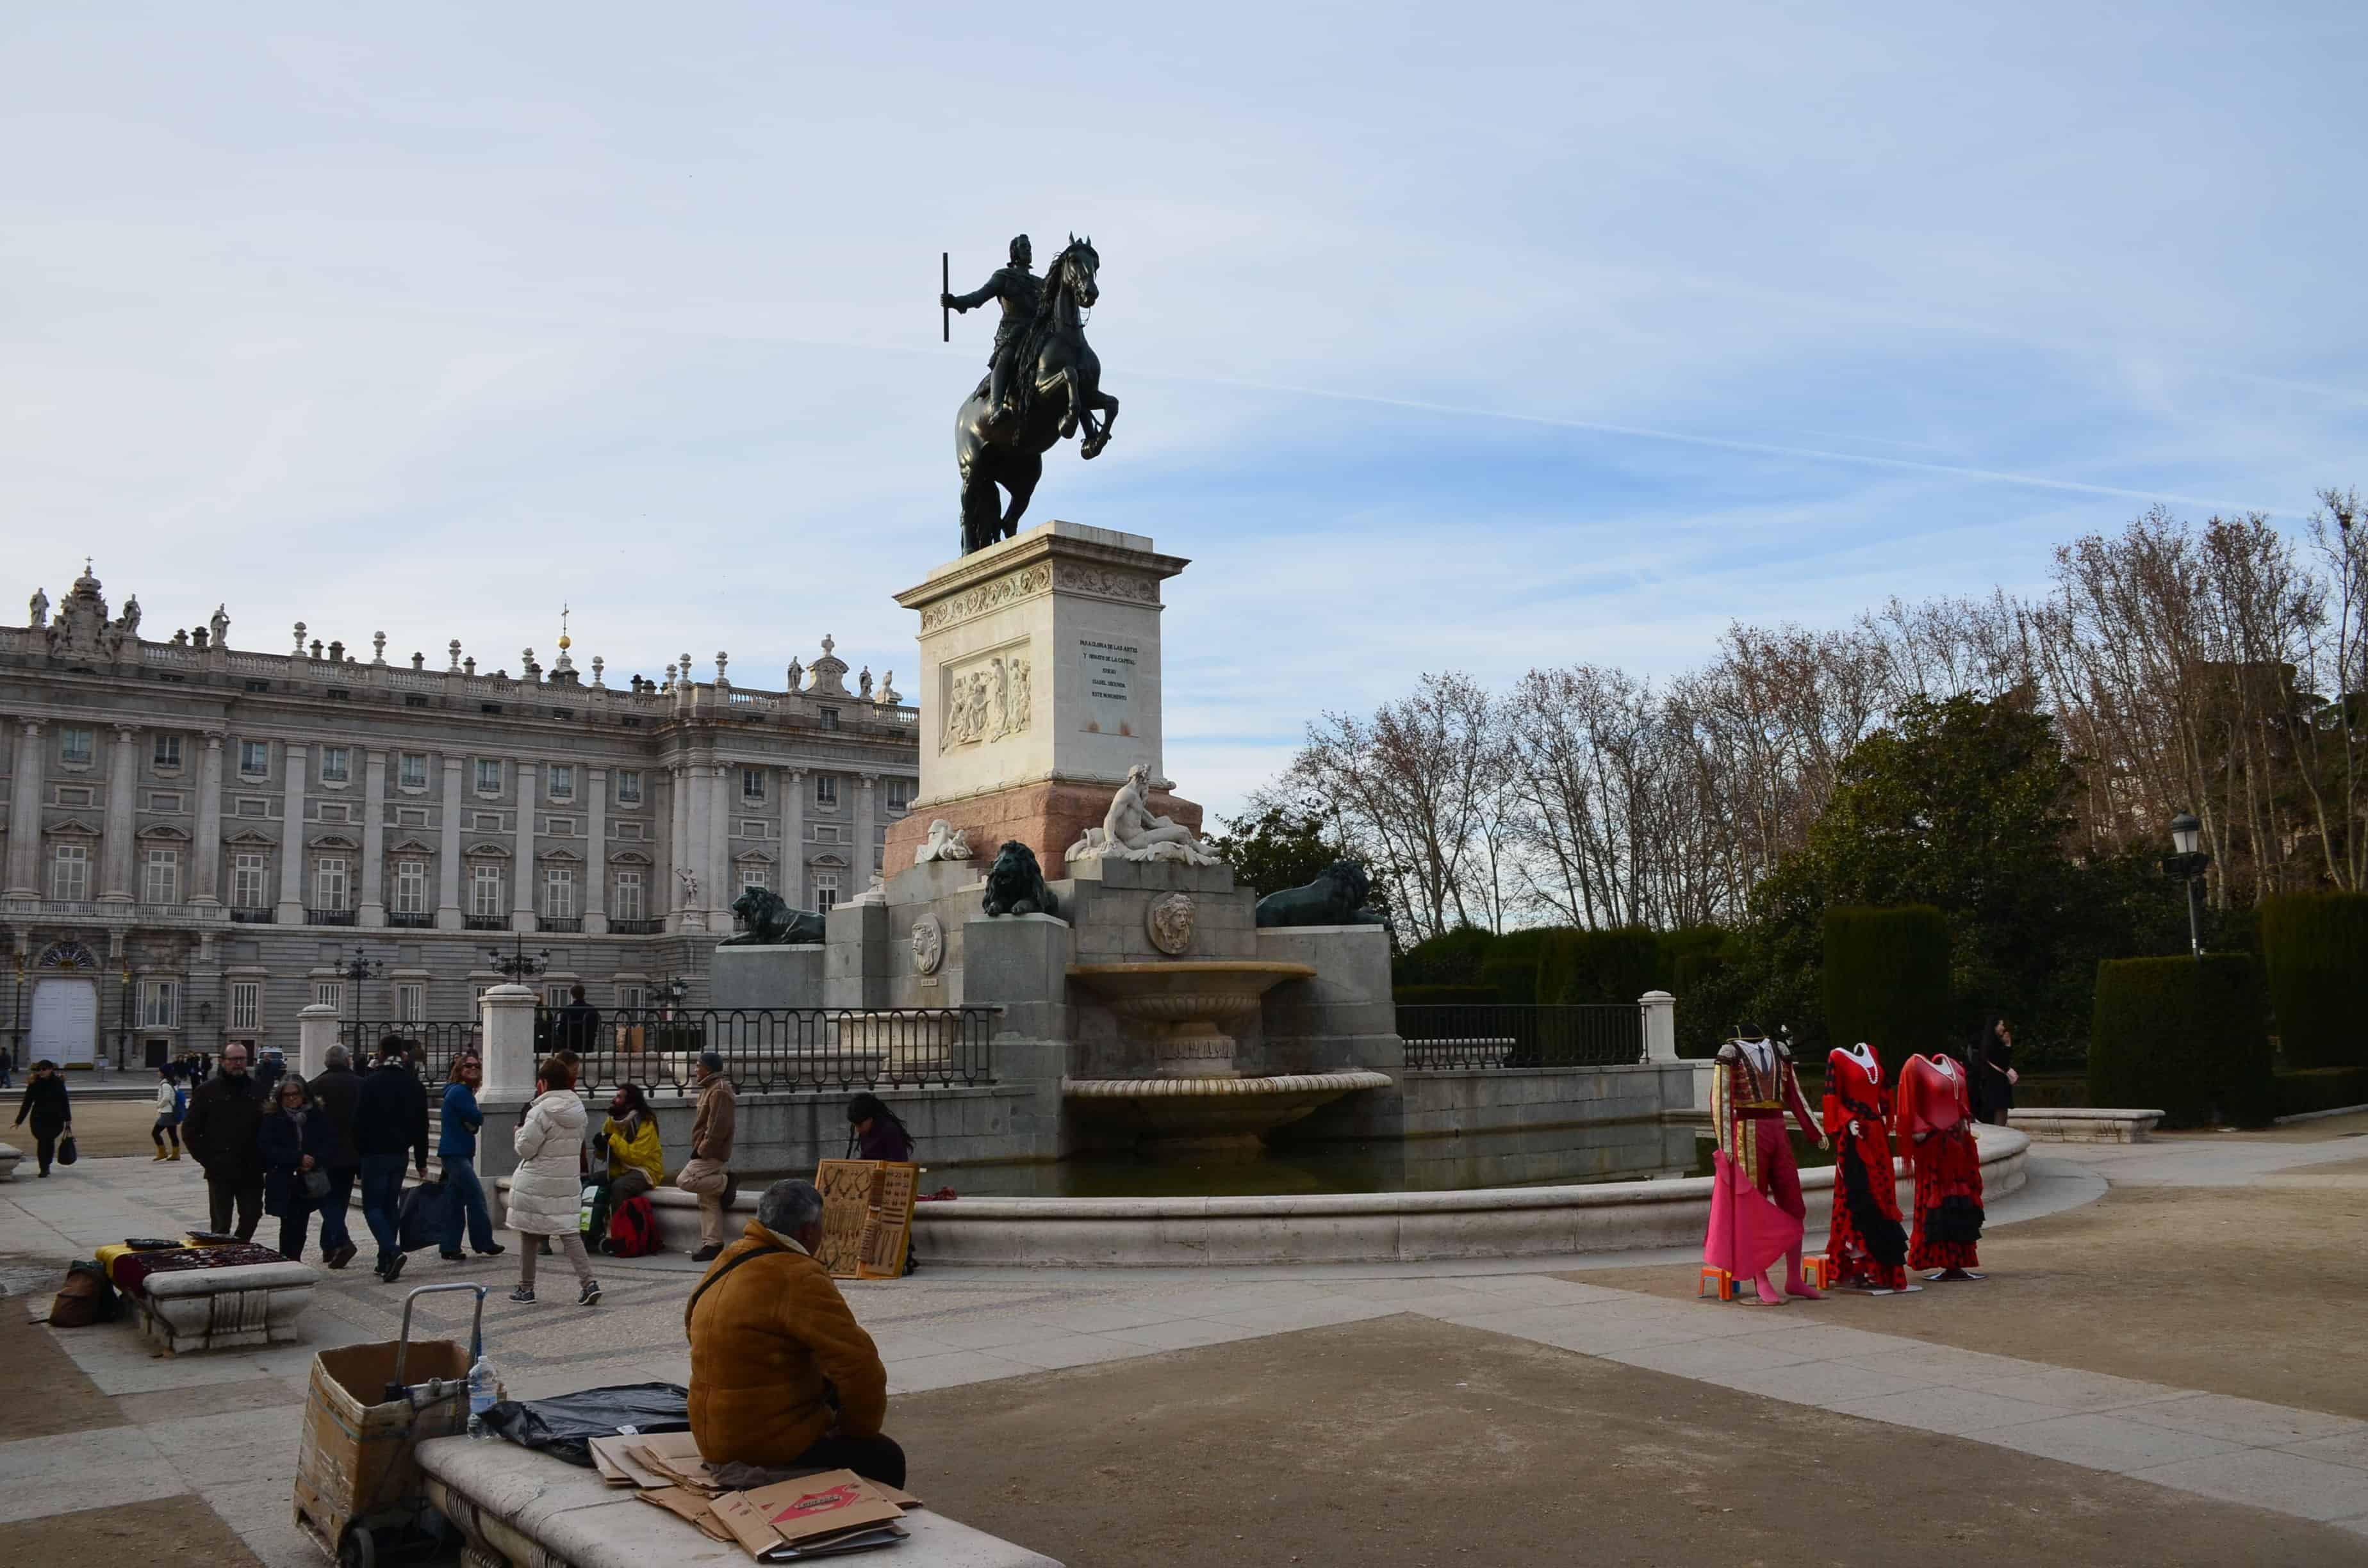 Monument to Felipe IV at Plaza de Oriente in Madrid, Spain